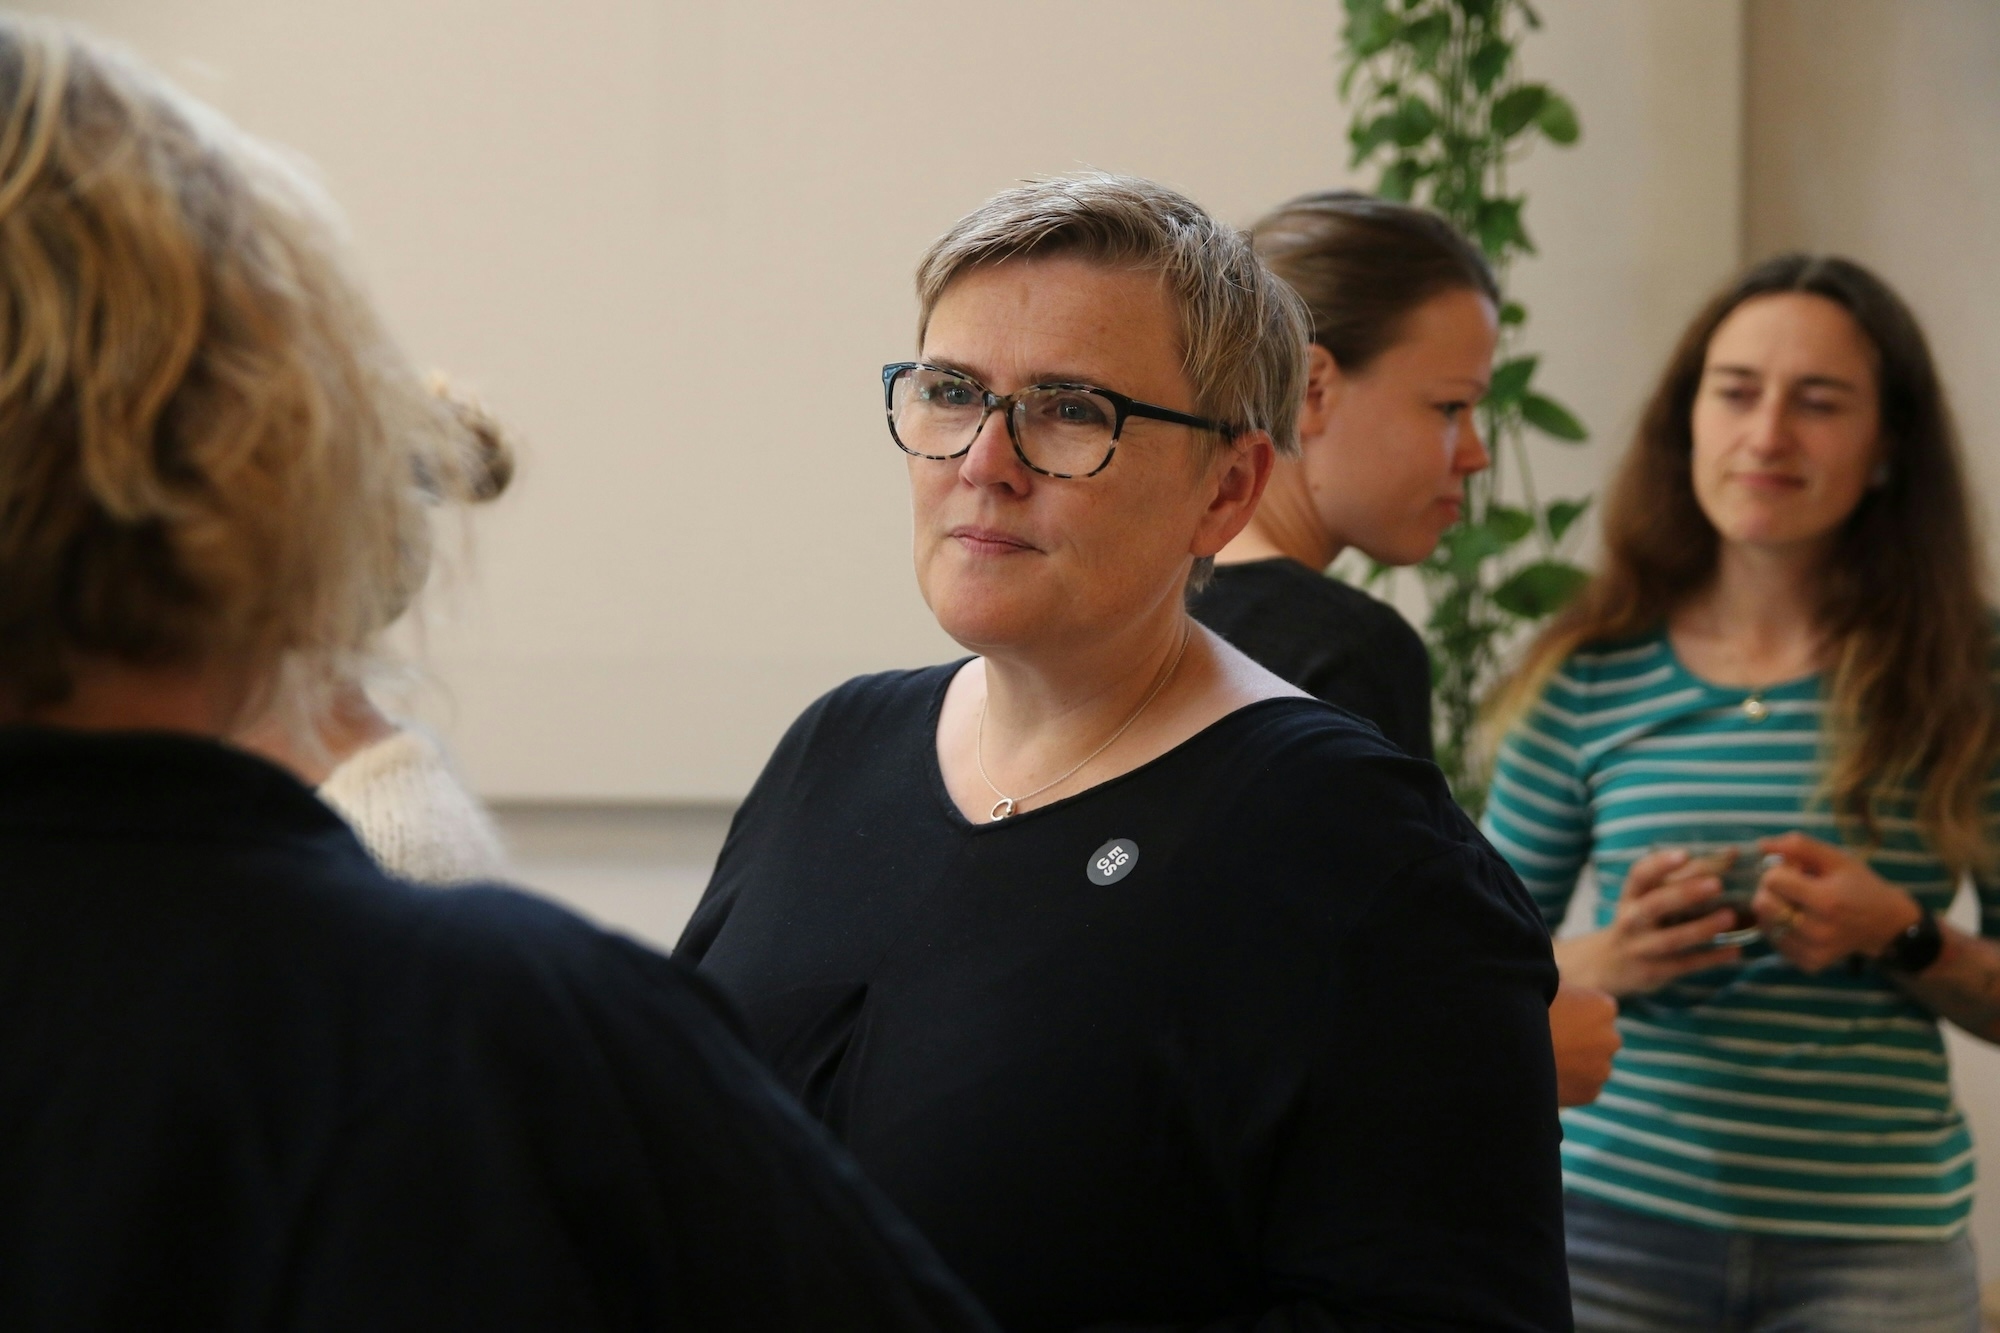 Elisabeth, EGGS Trondheim's leader, facing a colleague in conversation. Photo.